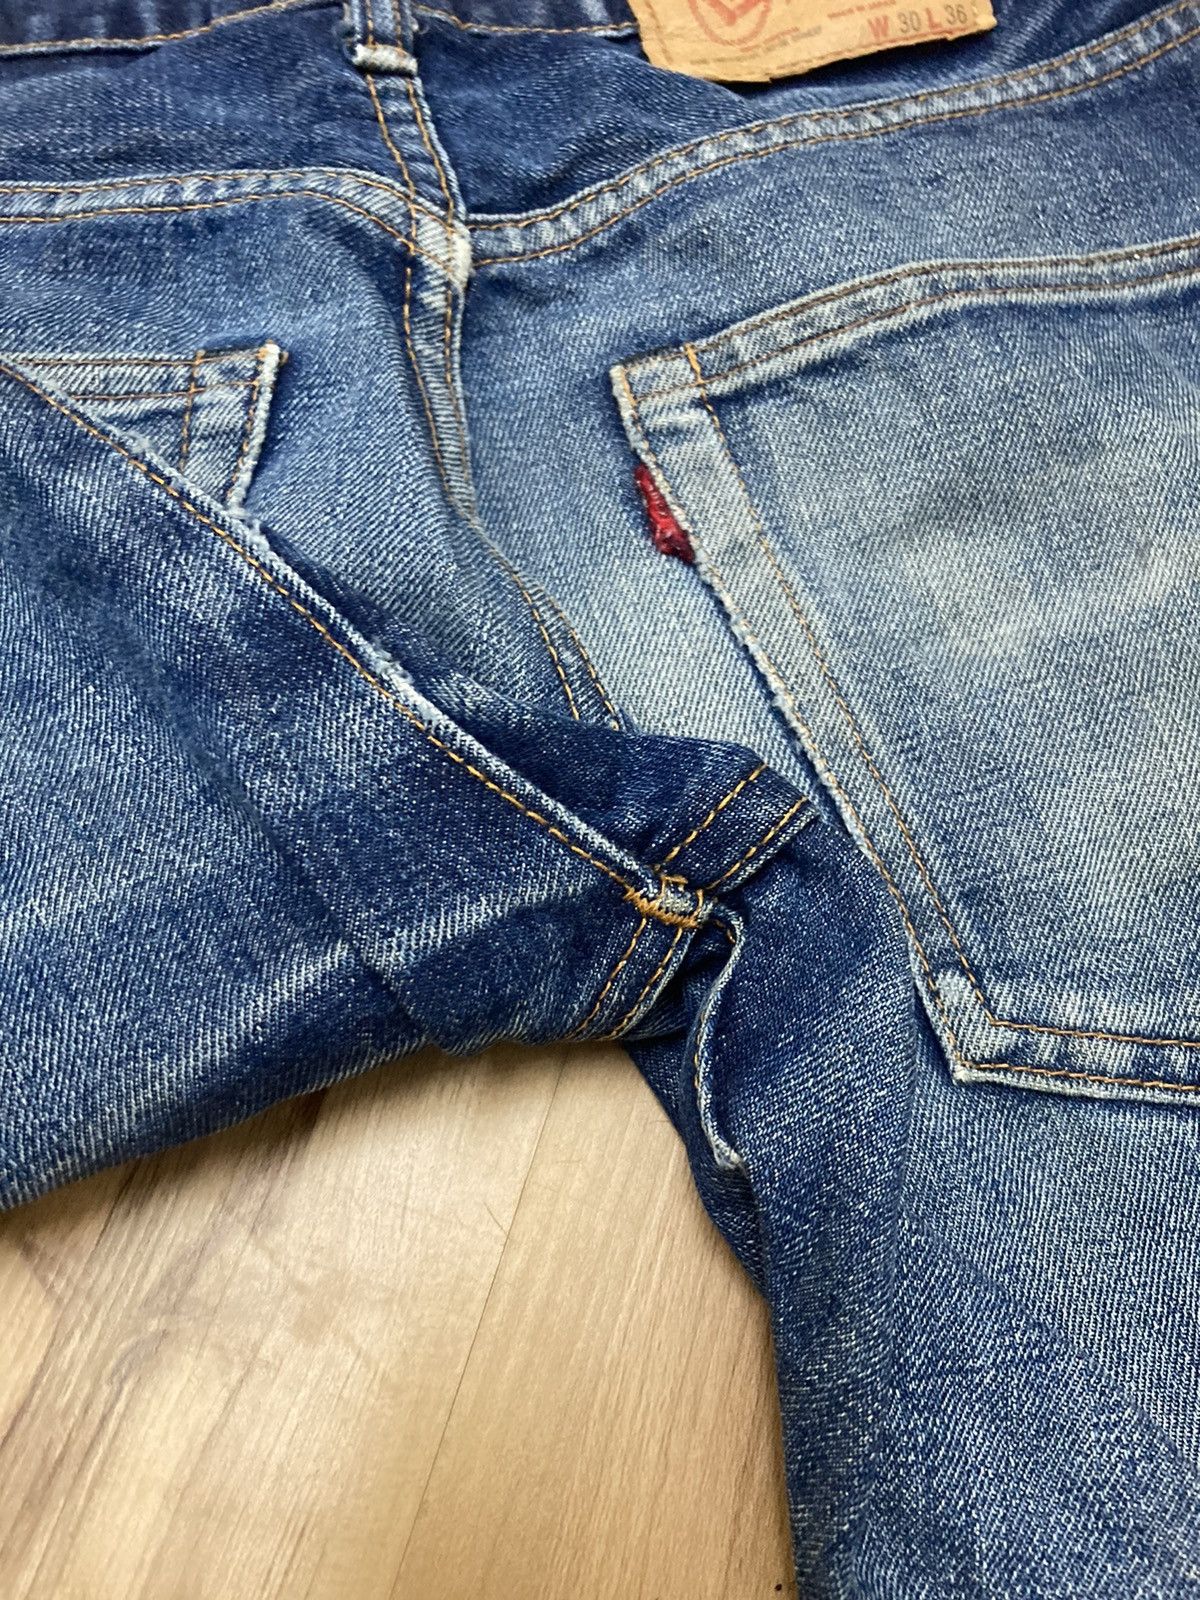 Denime Vintage denime jeans Size US 30 / EU 46 - 10 Thumbnail